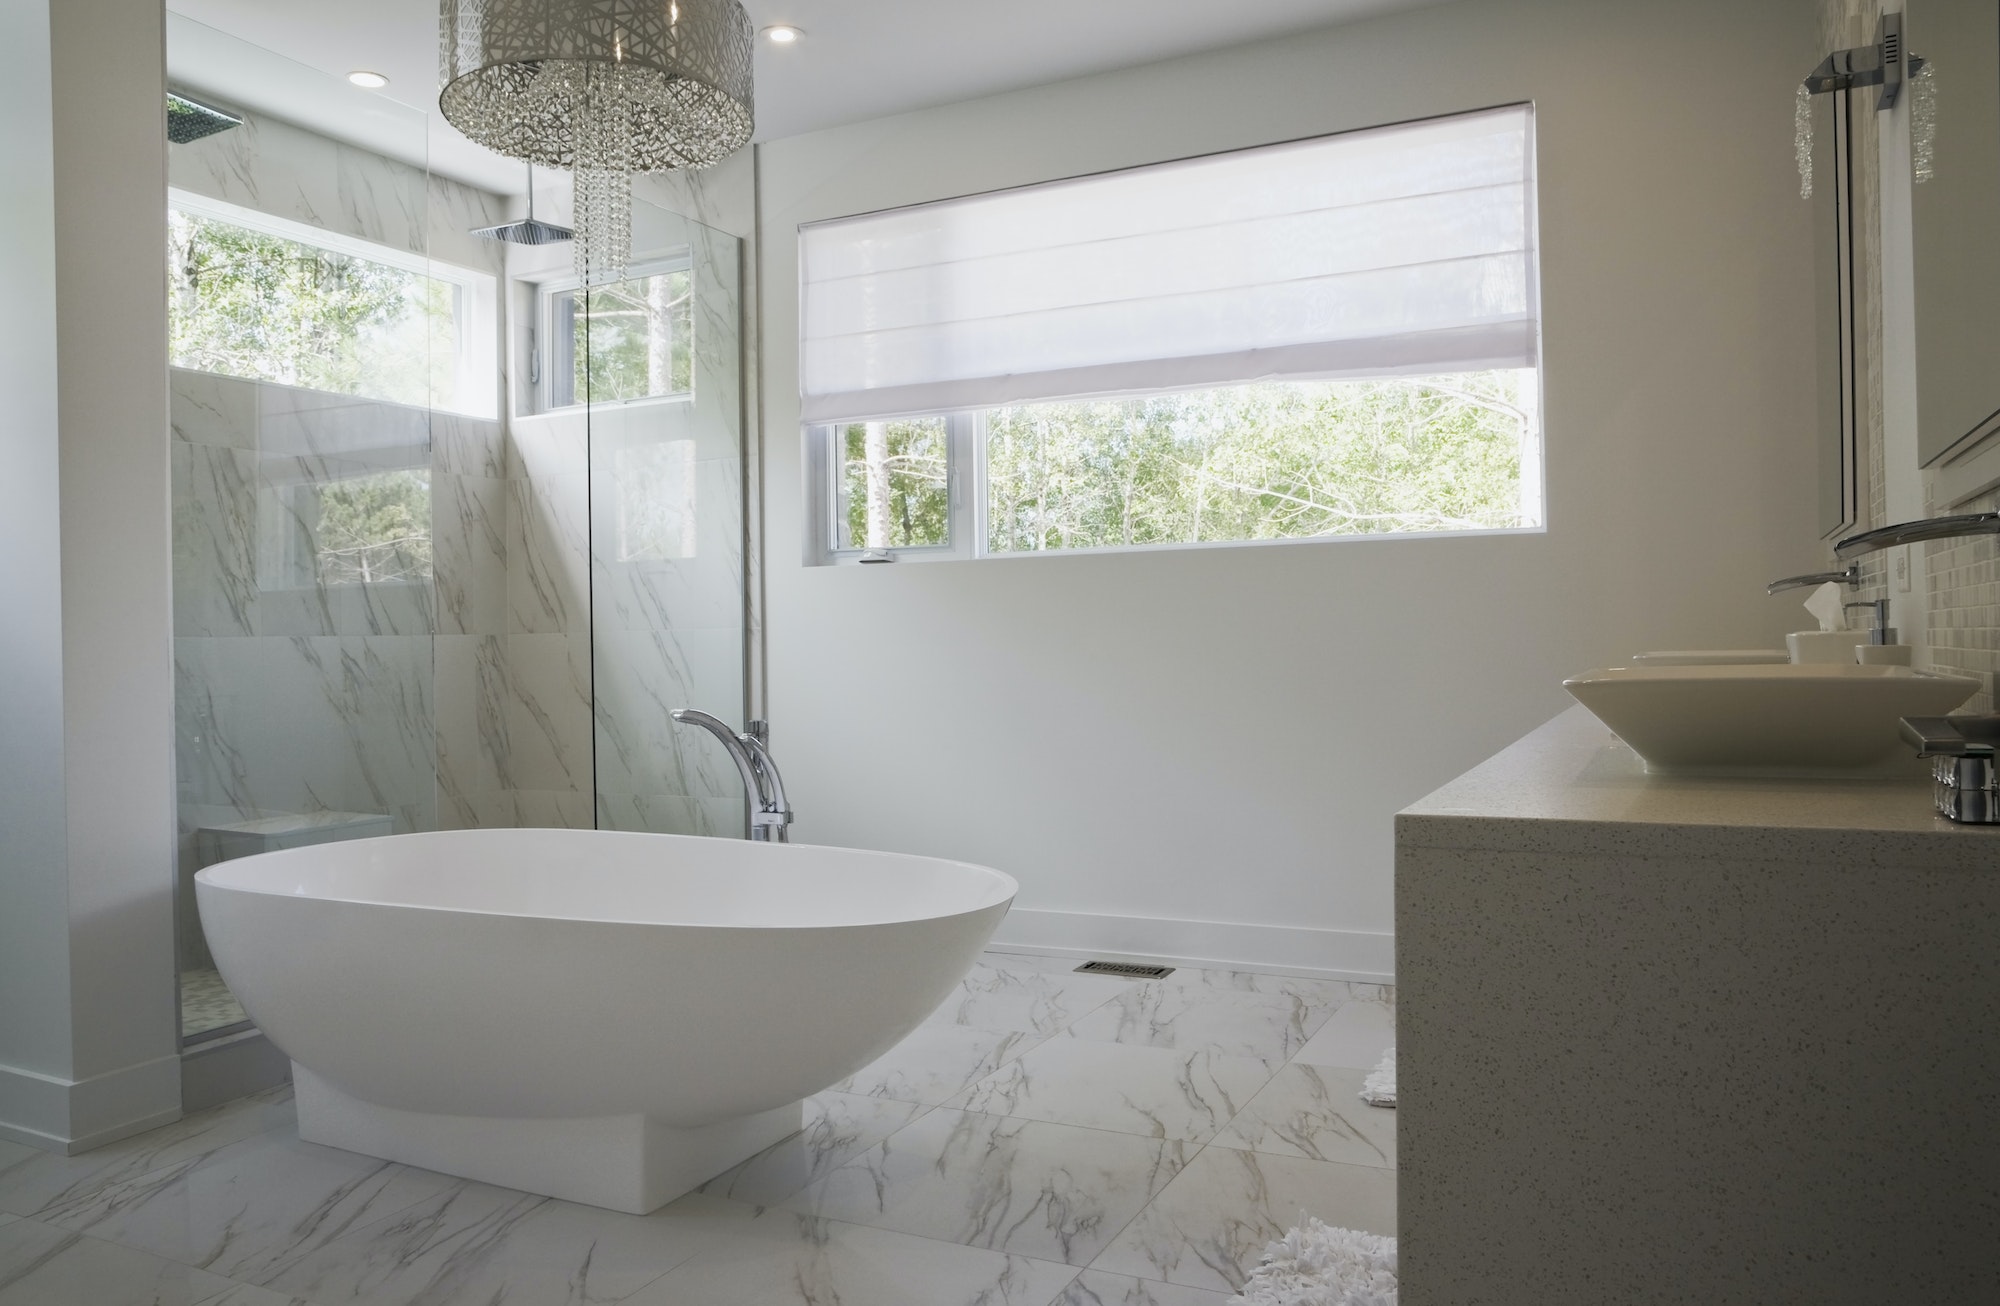 Modern interior design luxury bathroom with bath and glass walled shower